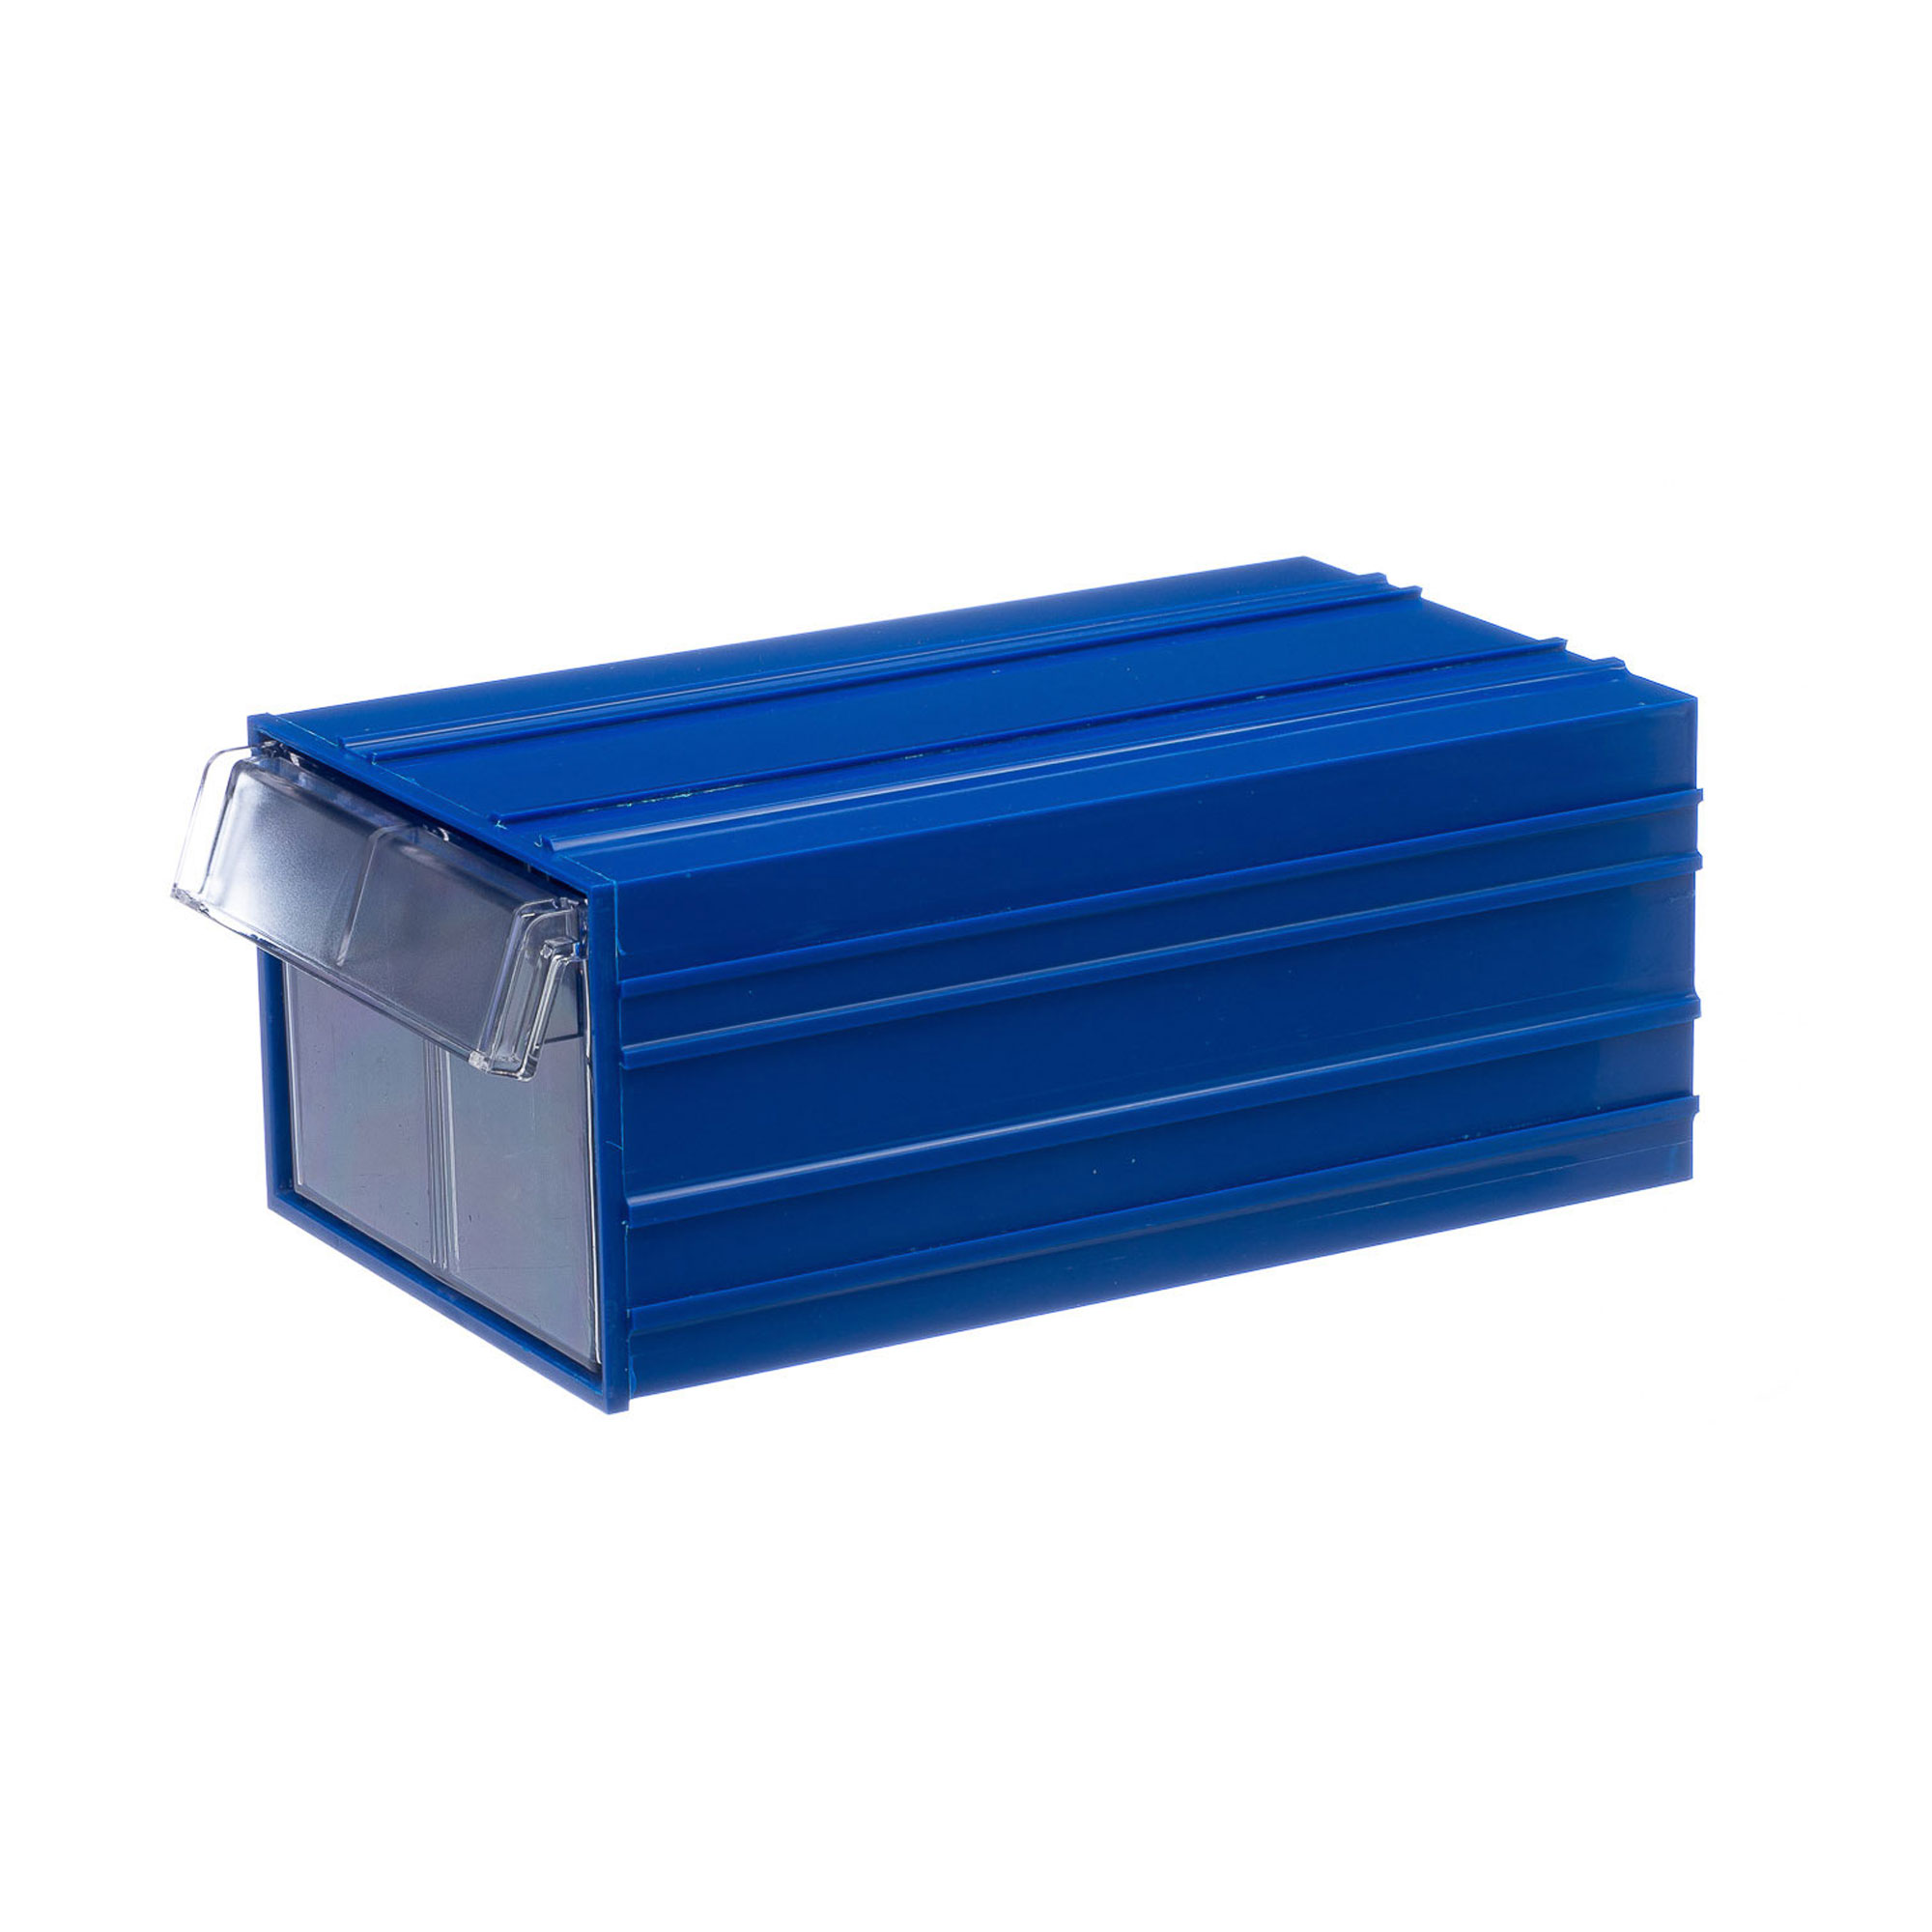 Пластиковый короб Стелла-техник С-2-синий-прозрачный 140х250х100мм пластиковый короб стелла техник c 2 к6 синий прозрачный 140х250х100мм комплект 6 штук